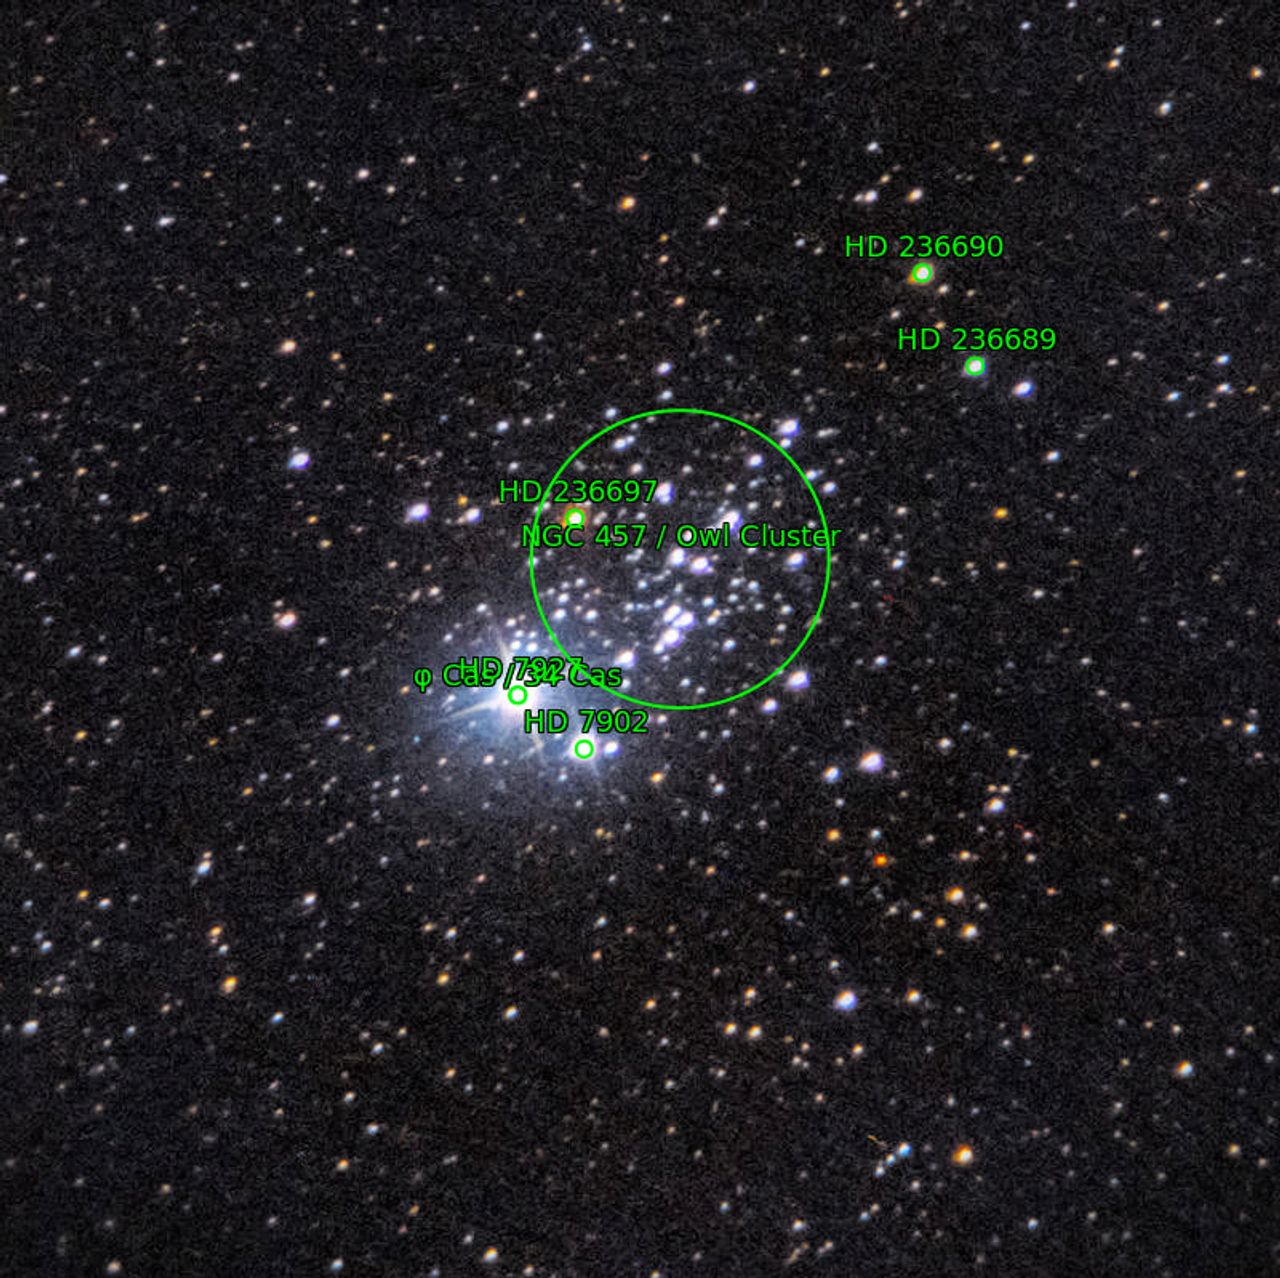 Annotation around NGC457